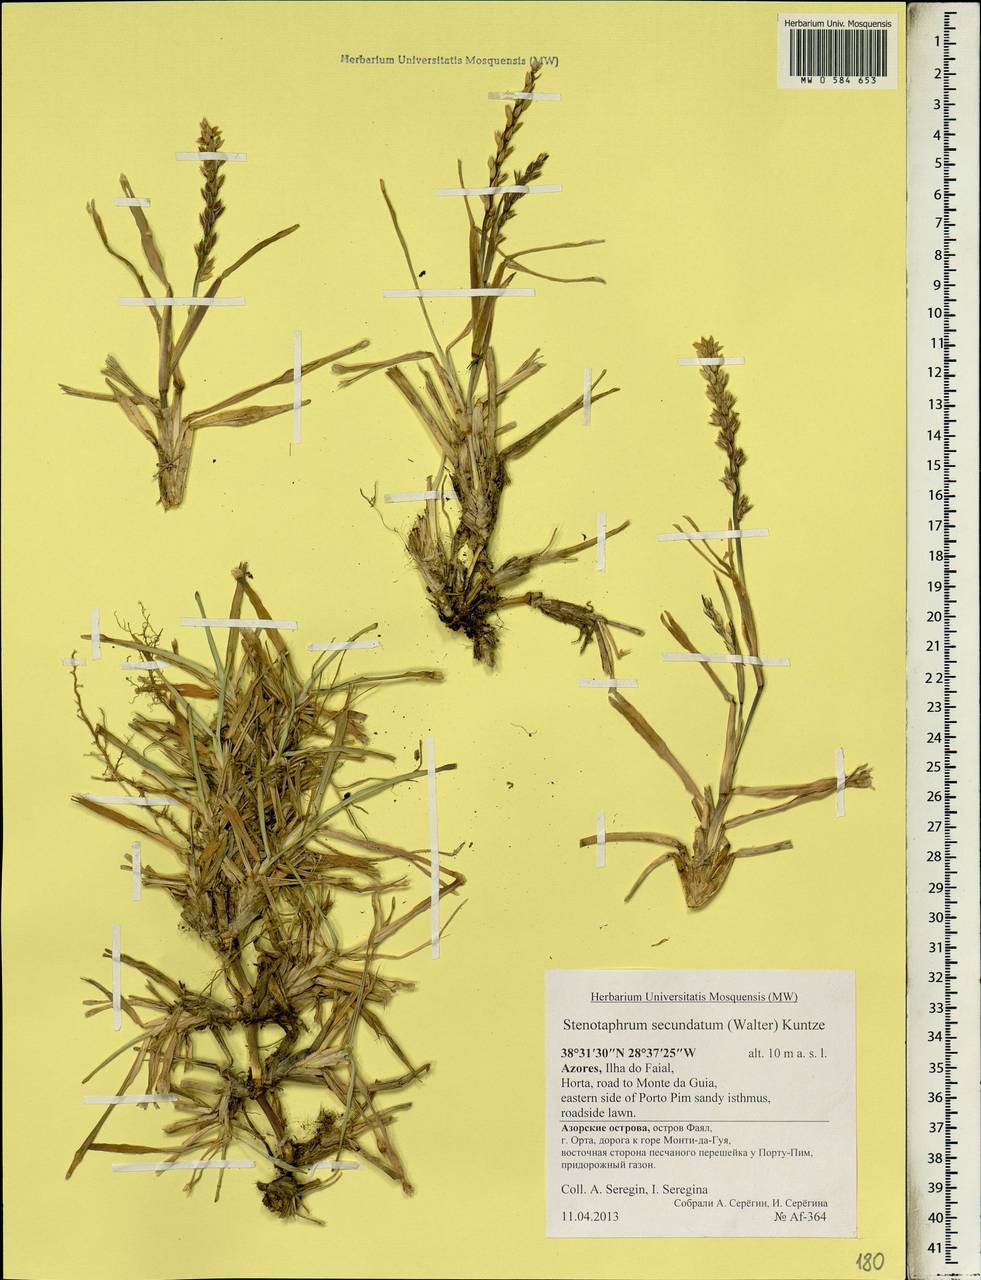 Stenotaphrum secundatum (Walter) Kuntze, Africa (AFR) (Portugal)